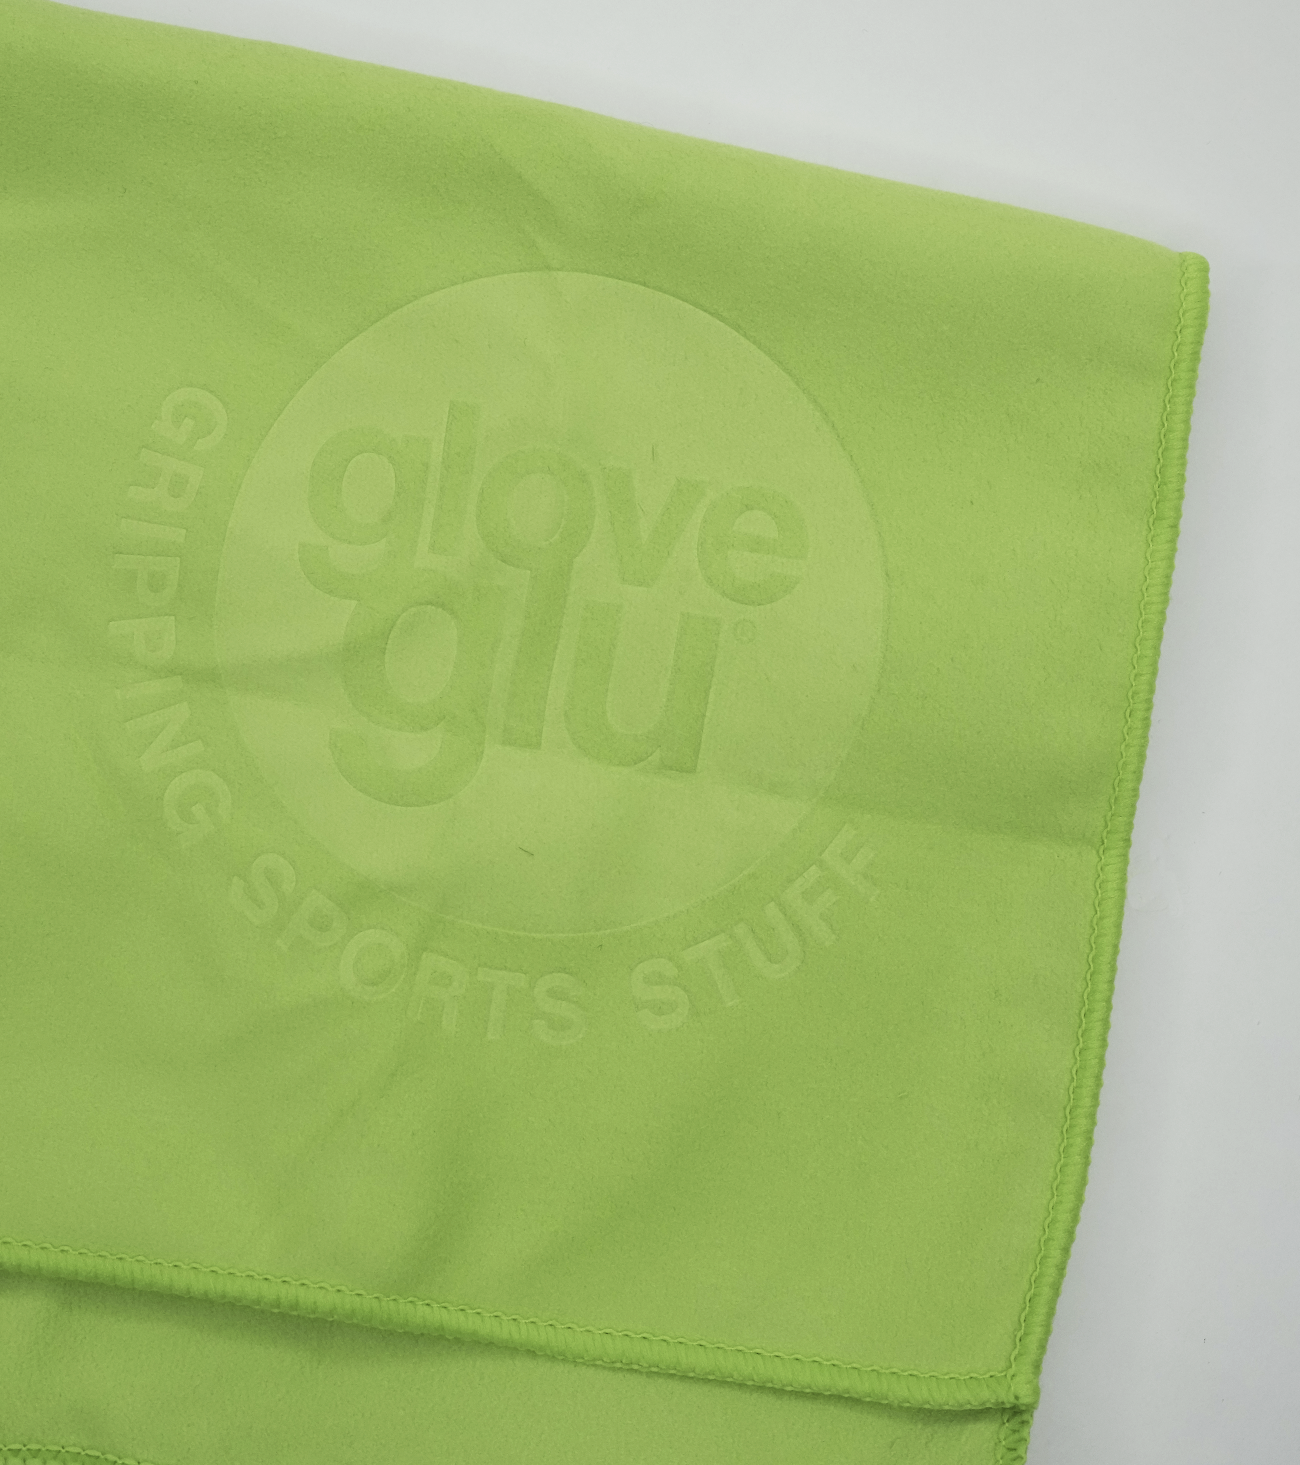 Microfibra sport towel Glove glu